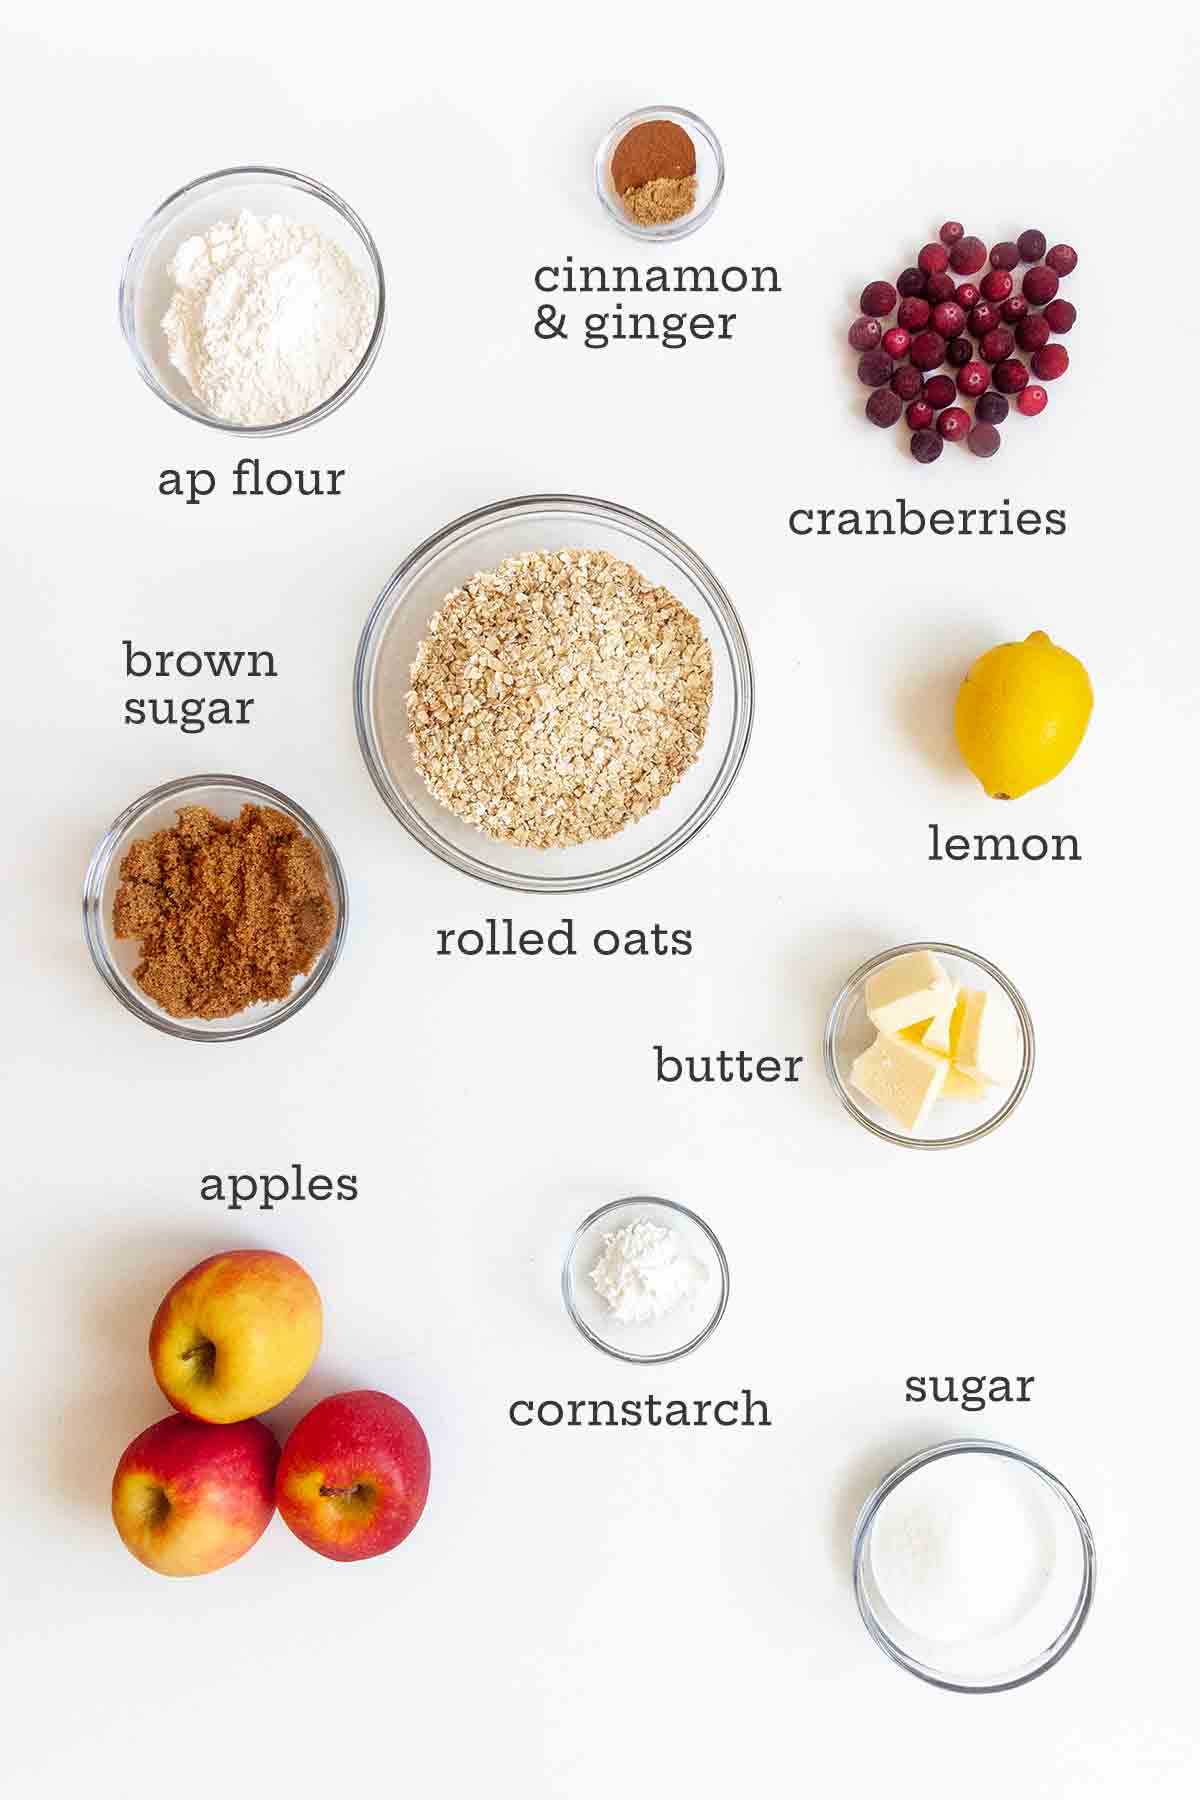 Ingredients for apple cranberry crisp--oats, flour, brown sugar, cranberries, lemon, butter, sugar, cornstarch, and apples.